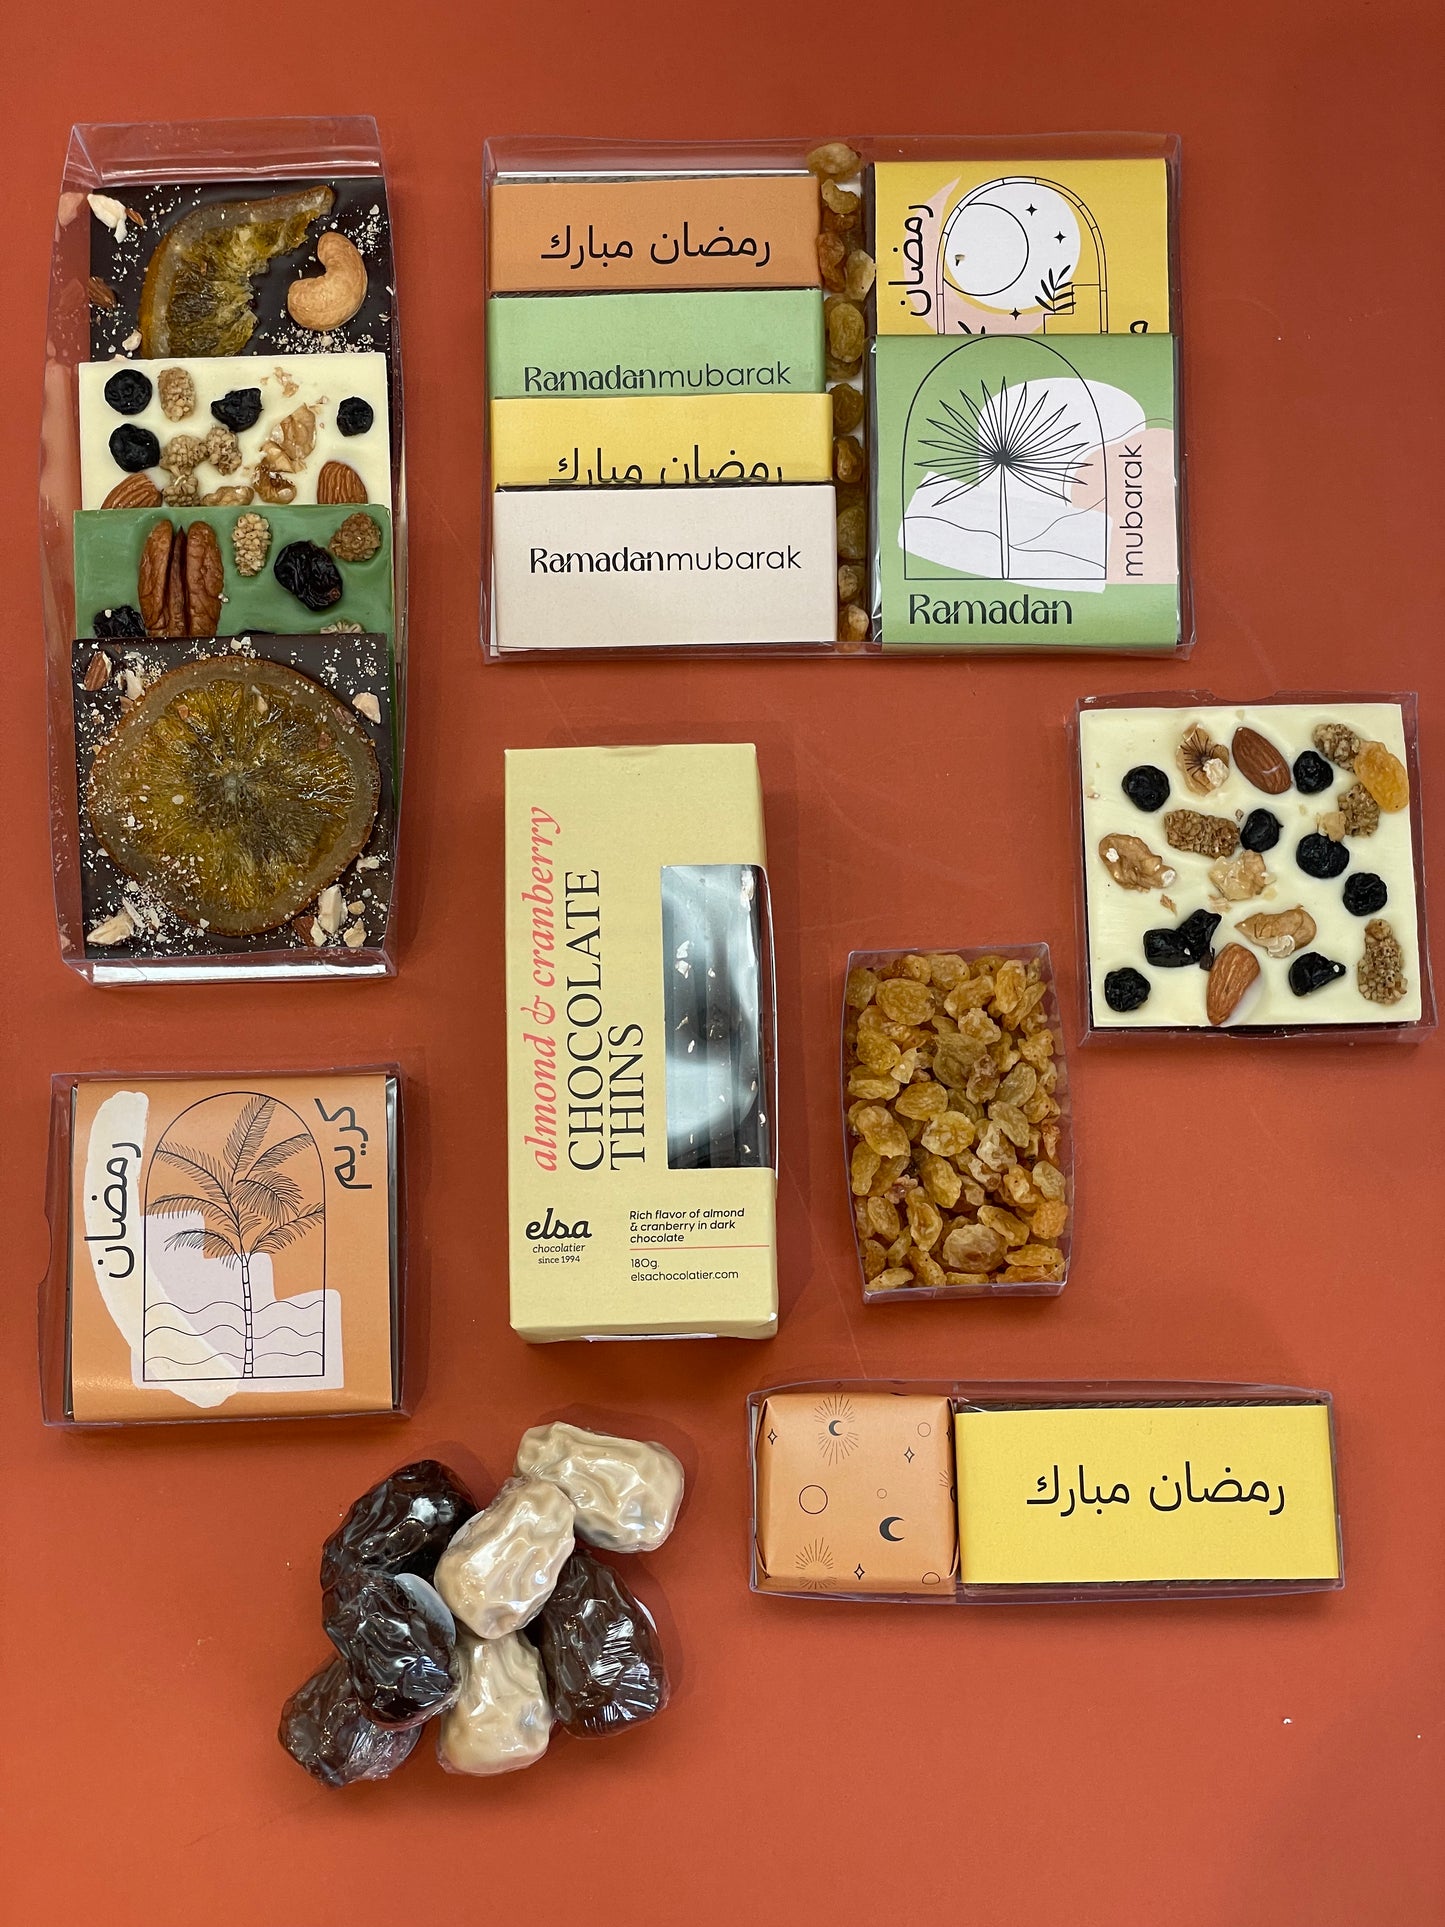 The Ramadan Table Chocolate Box